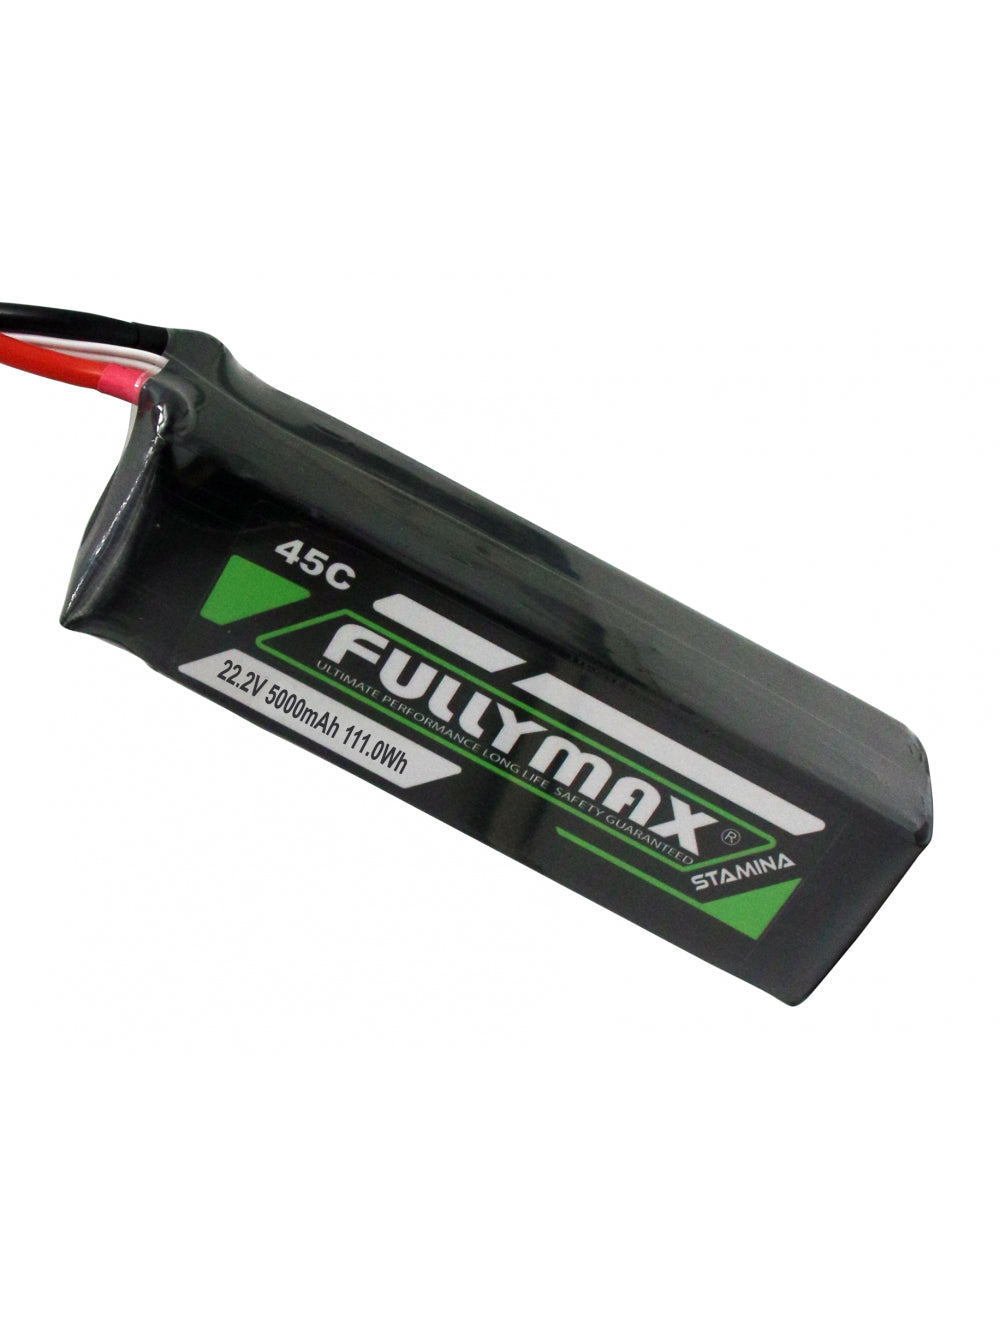 Overlander Fullymax 5000mAh 22.2V 6S 45C LiPo Battery - No Connector 3448